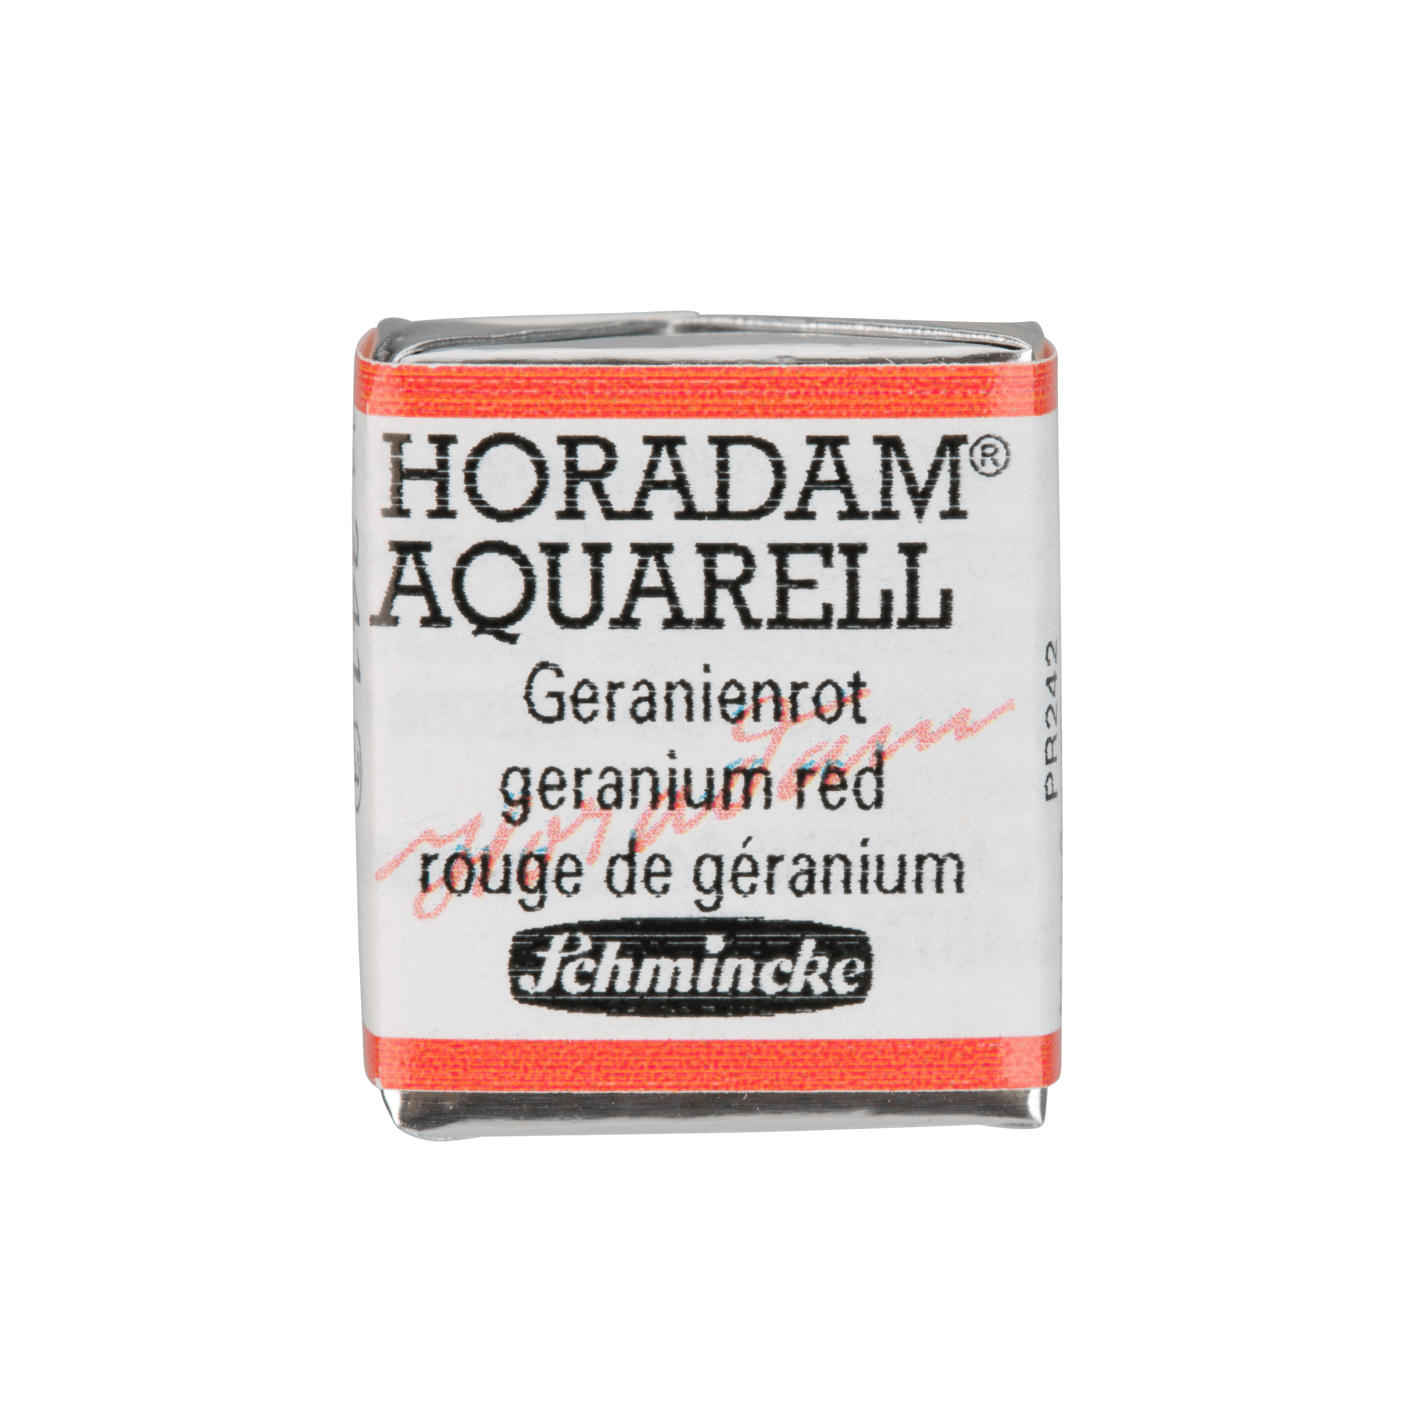 Schmincke Horadam Aquarell pans 1/2 pan Geranium Red